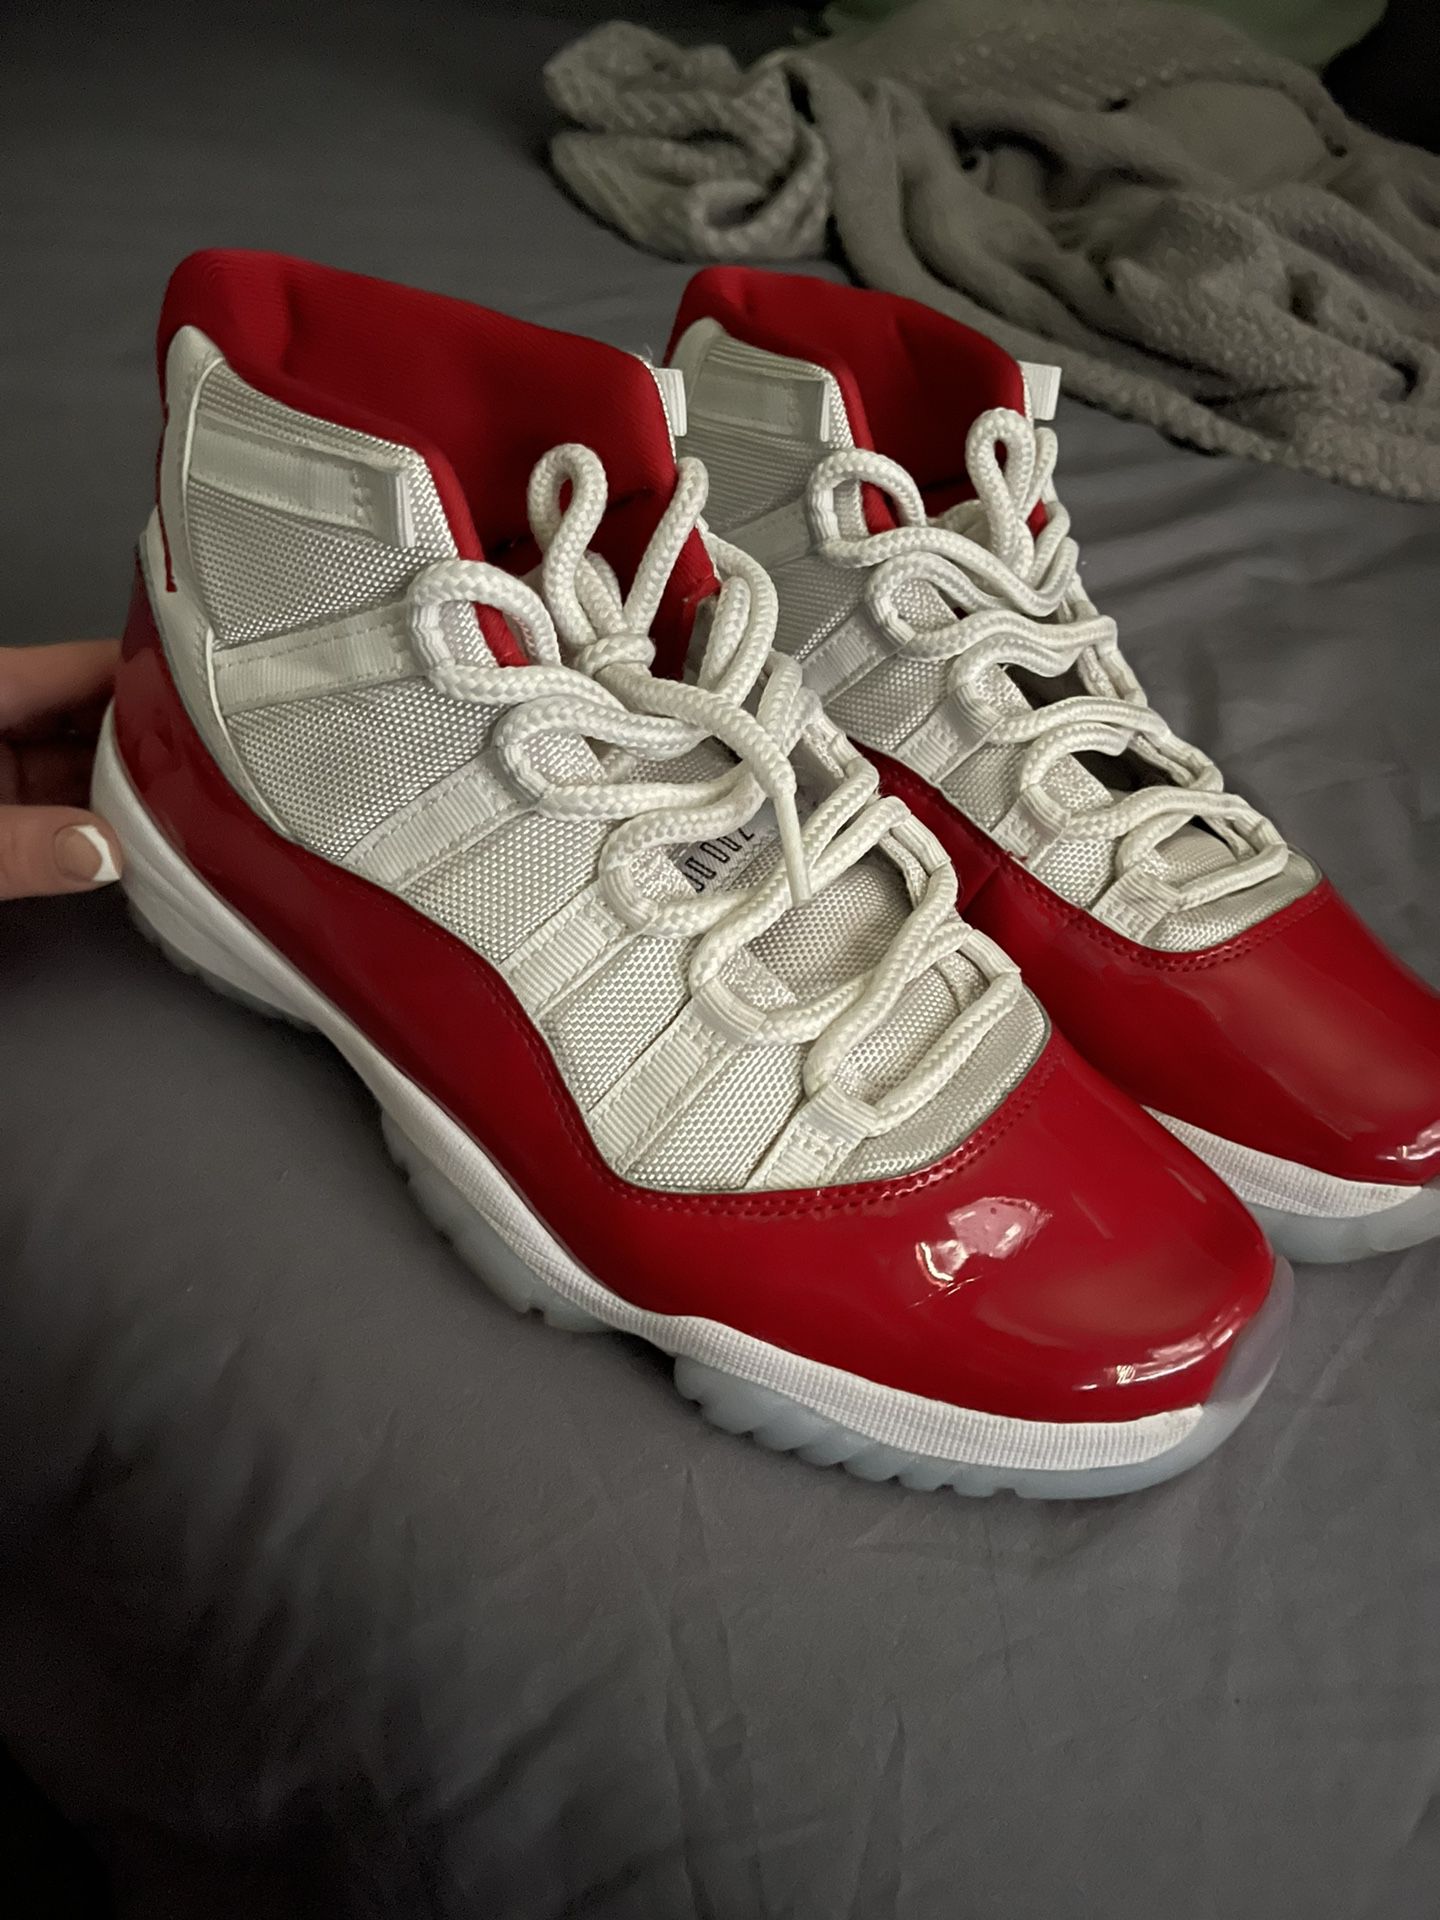 Air Jordan Retro Cherry 11s